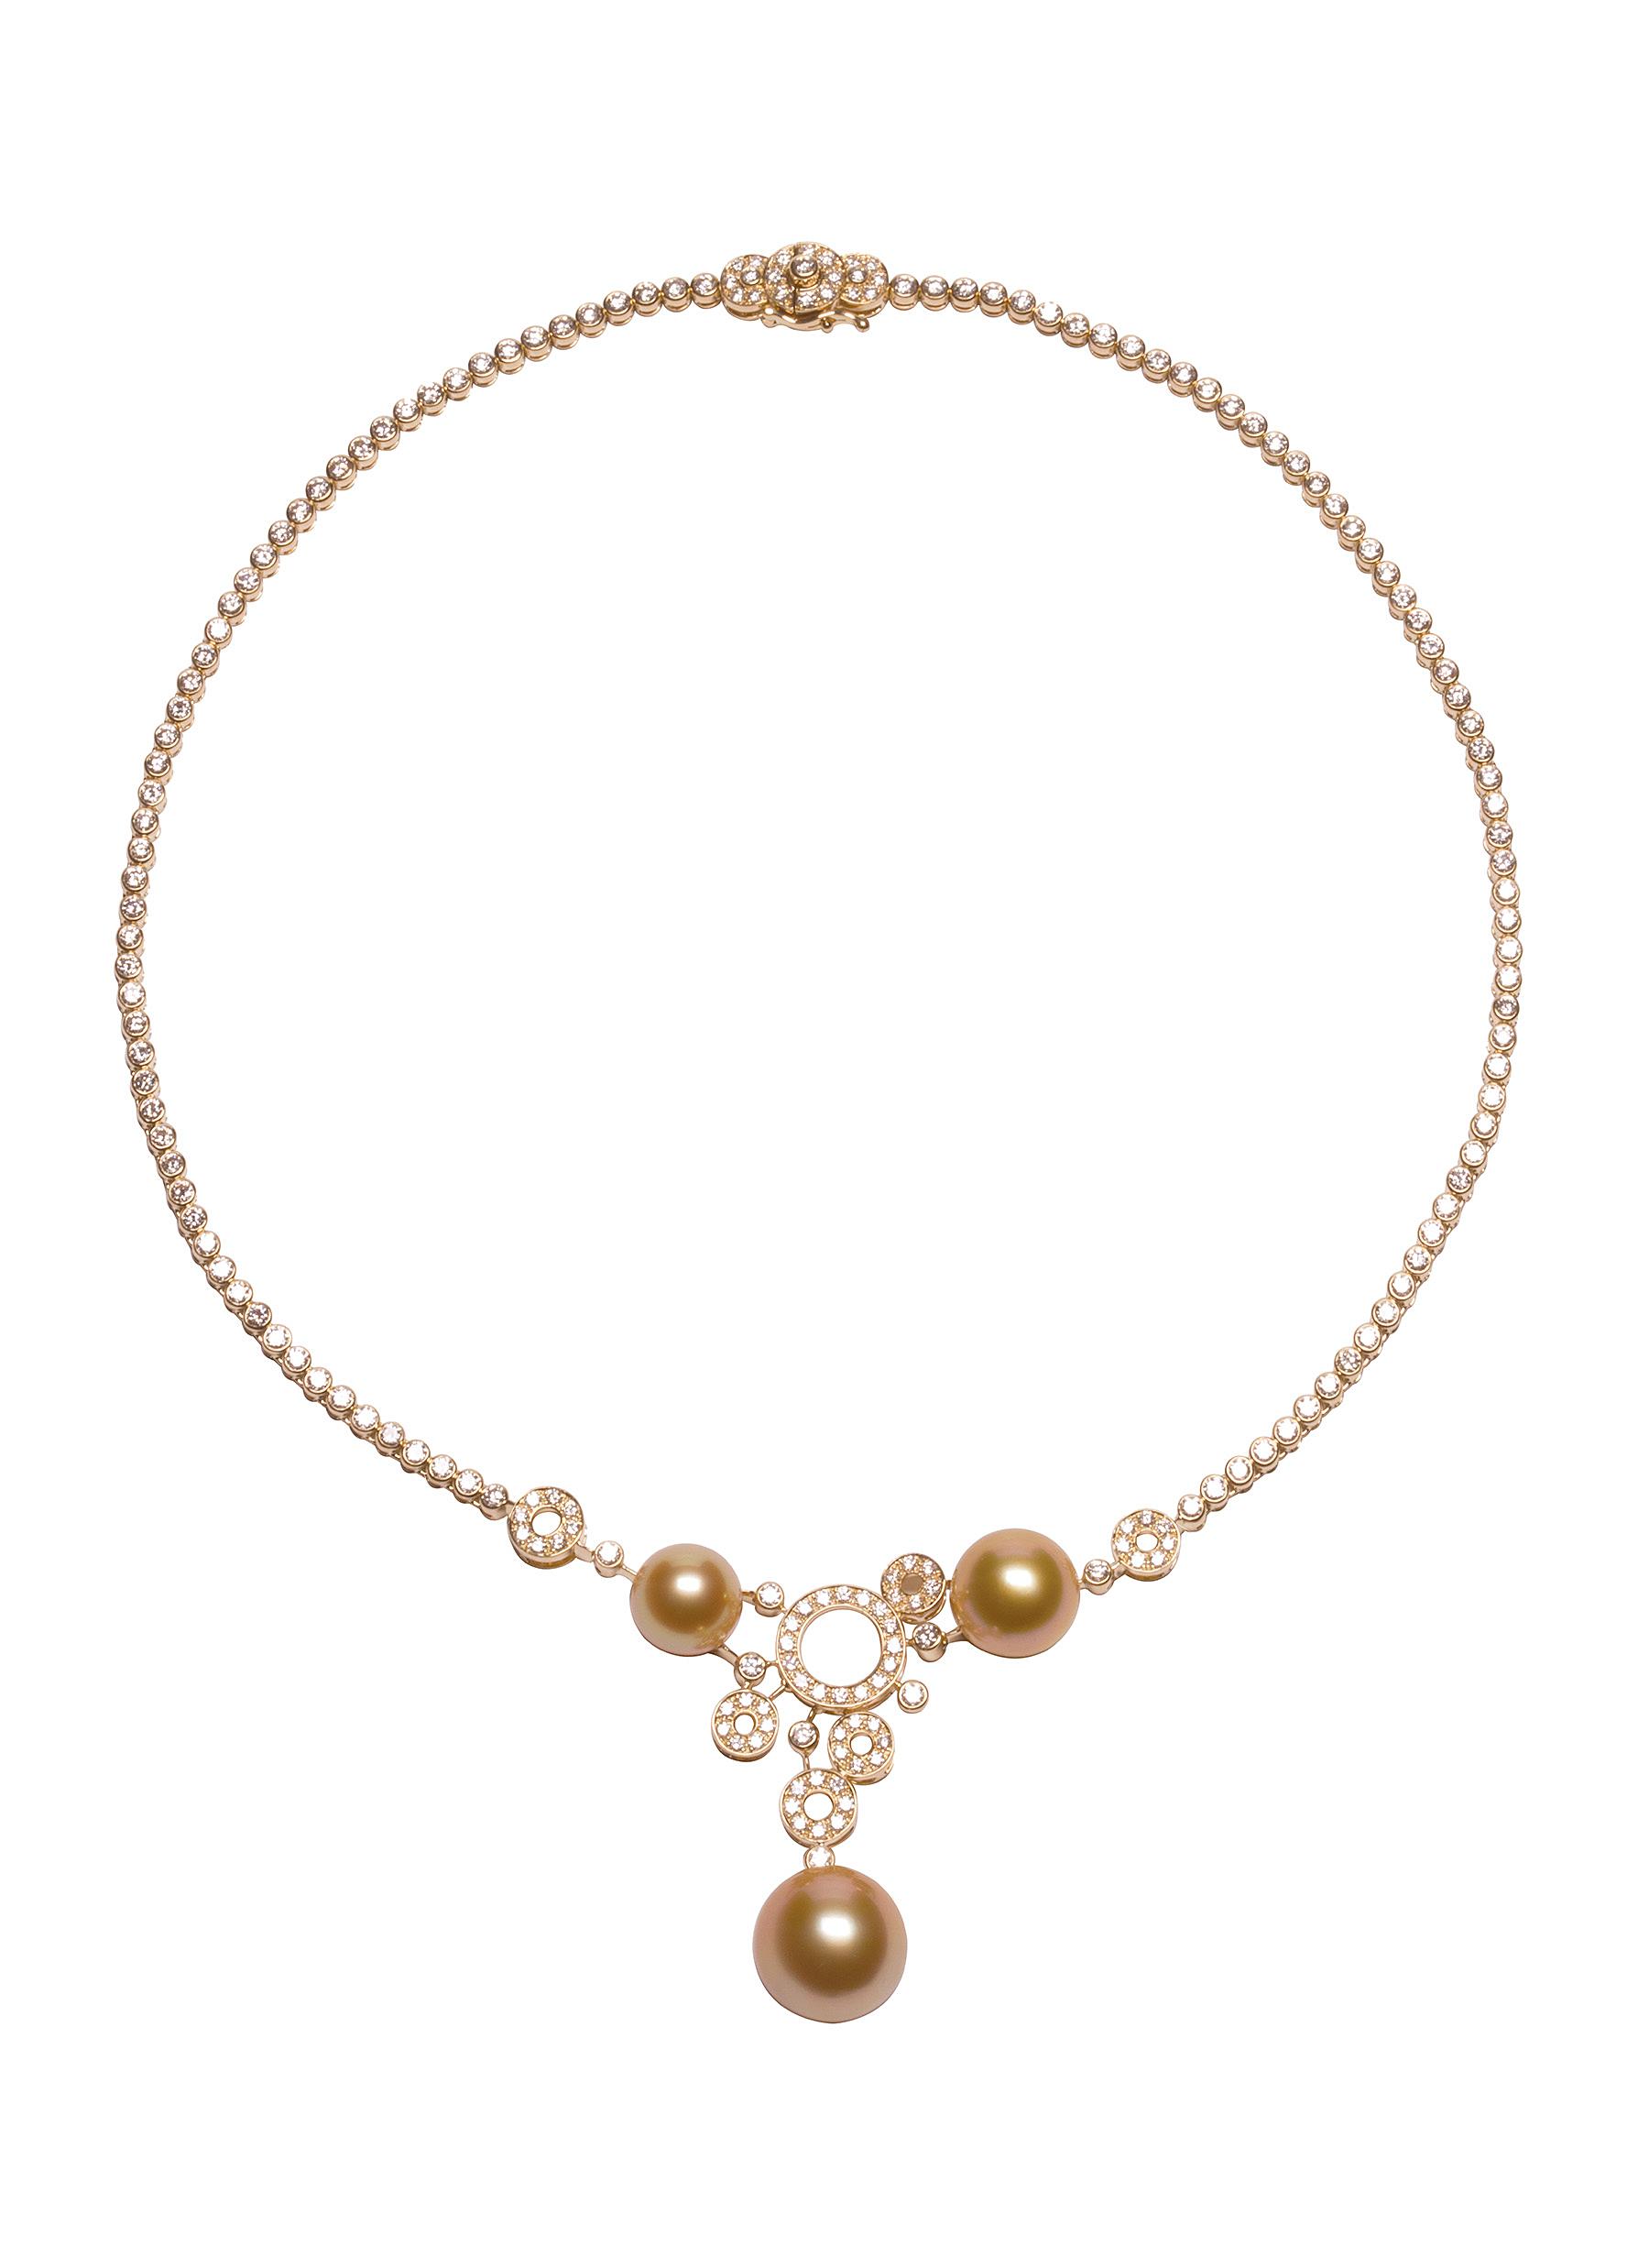 Golden South Sea Pearls Strand - Bopies Diamonds & Fine Jewelry